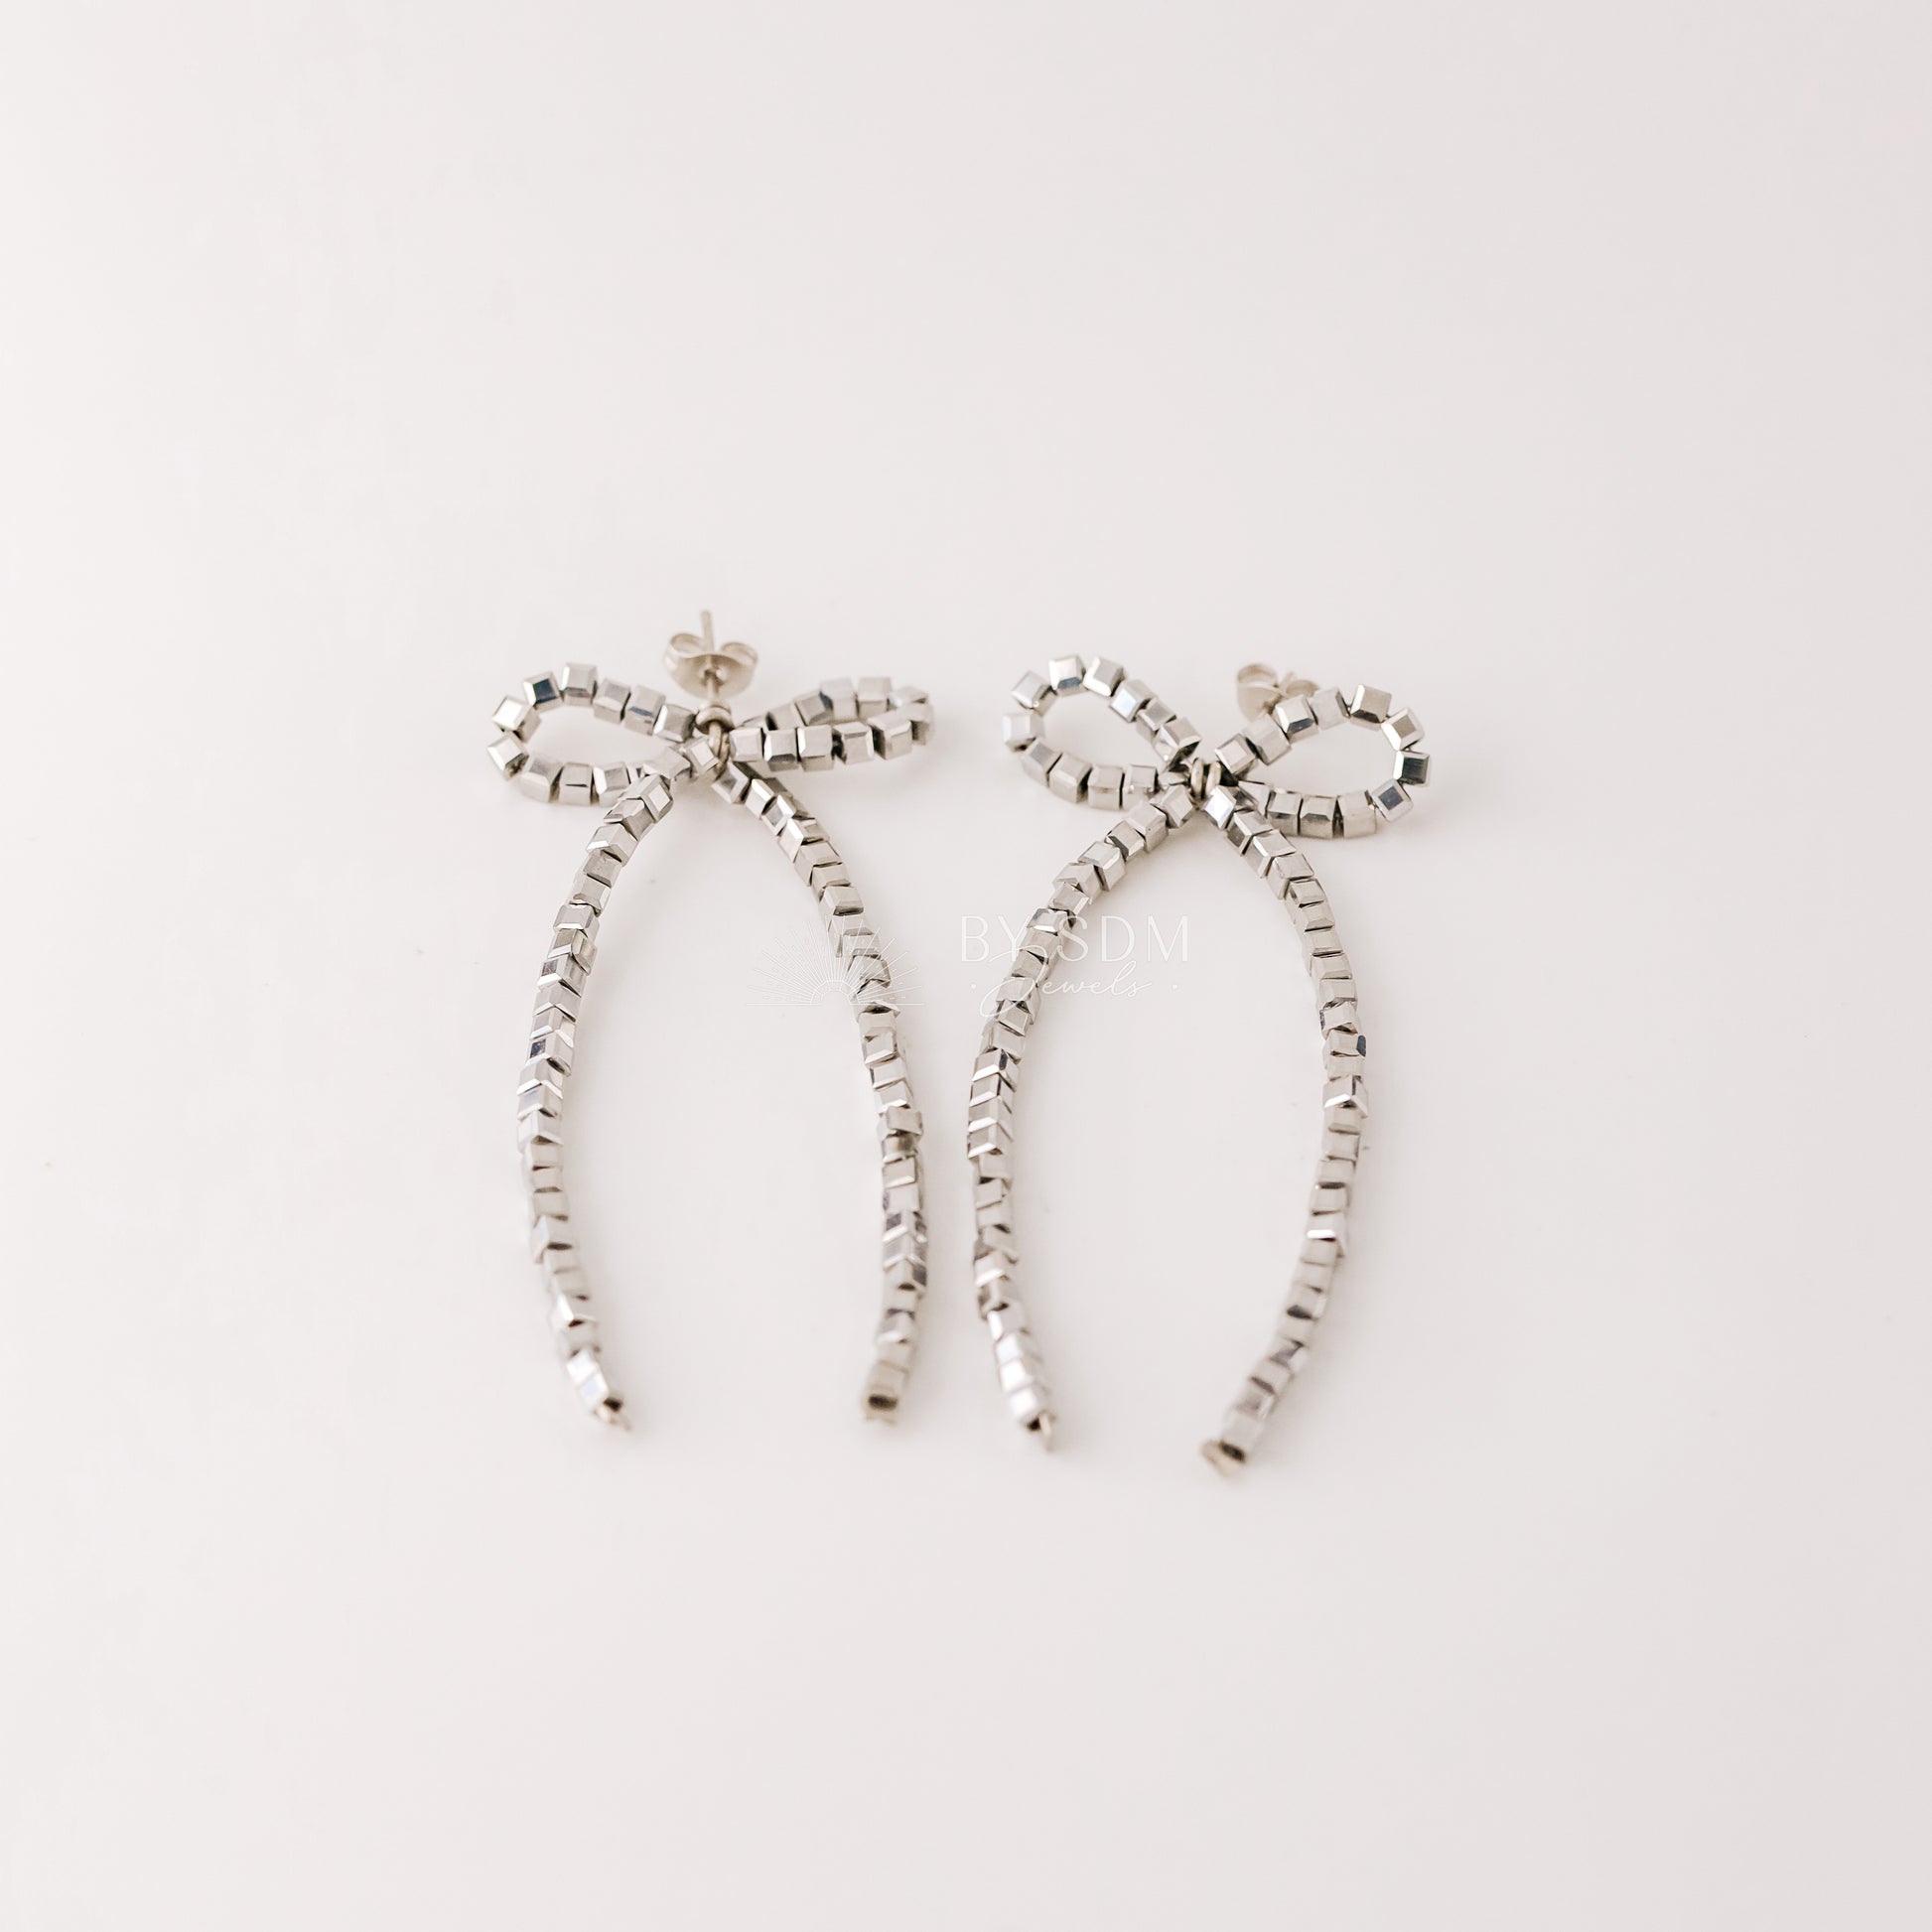 Ribbon Bow Stud Earrings in Stainless Steel, Silver or Gold, Dainty Earrings, Silver Bow Drop Earrings, Bow Jewelry, Bridesmaid's Jewellery